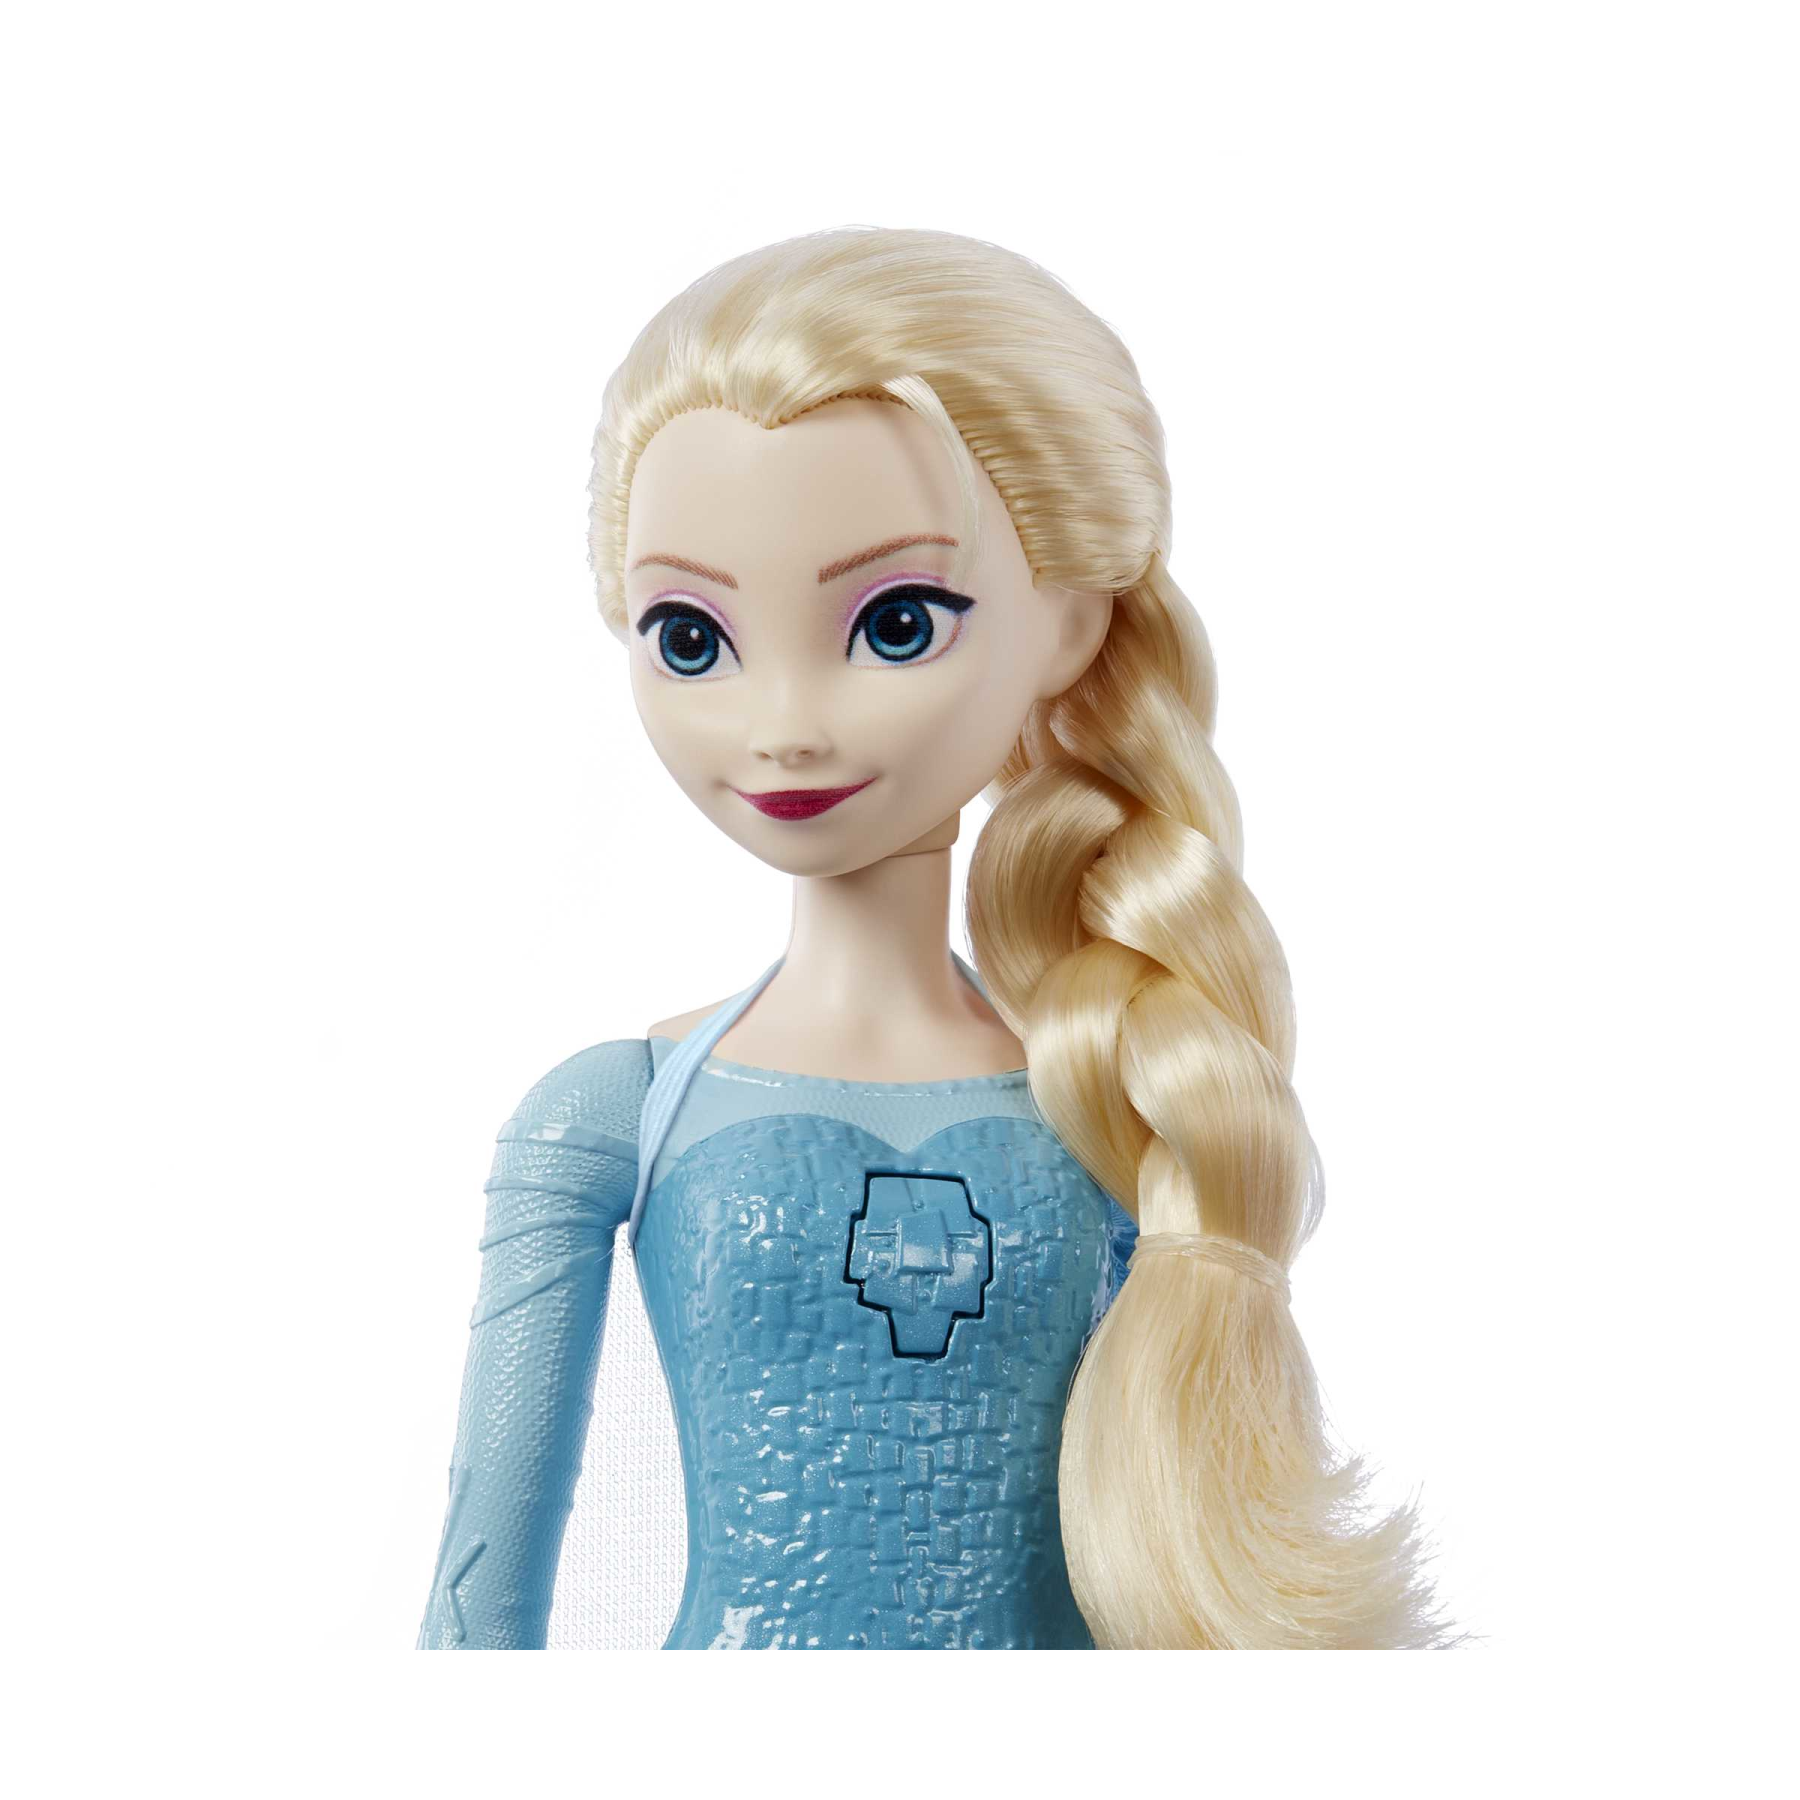 Disney frozen - elsa all'alba sorgerò, bambola con look esclusivo, canta  “all'alba sorgerò” dal film disney frozen, giocattolo per bambini, 3+ anni,  hmg33 - Toys Center